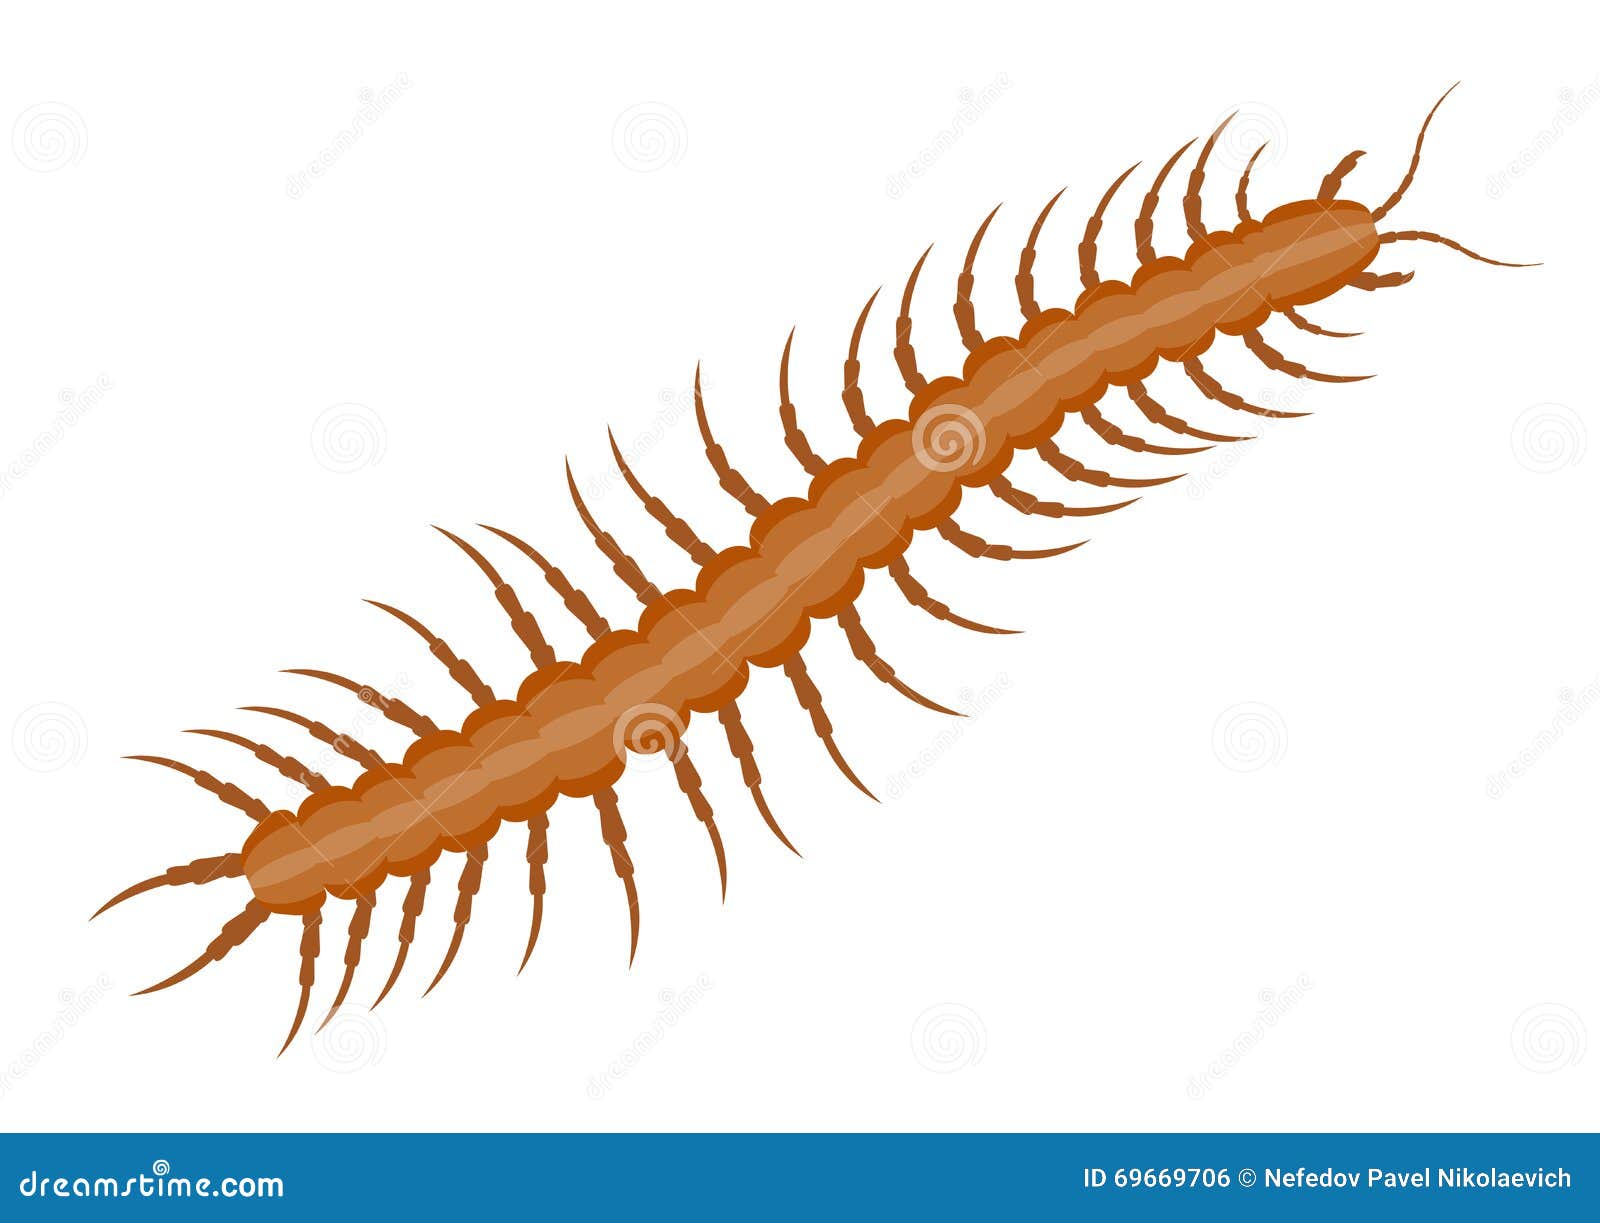 Realistic Centipede Vector Illustration Stock Vector - Illustration of